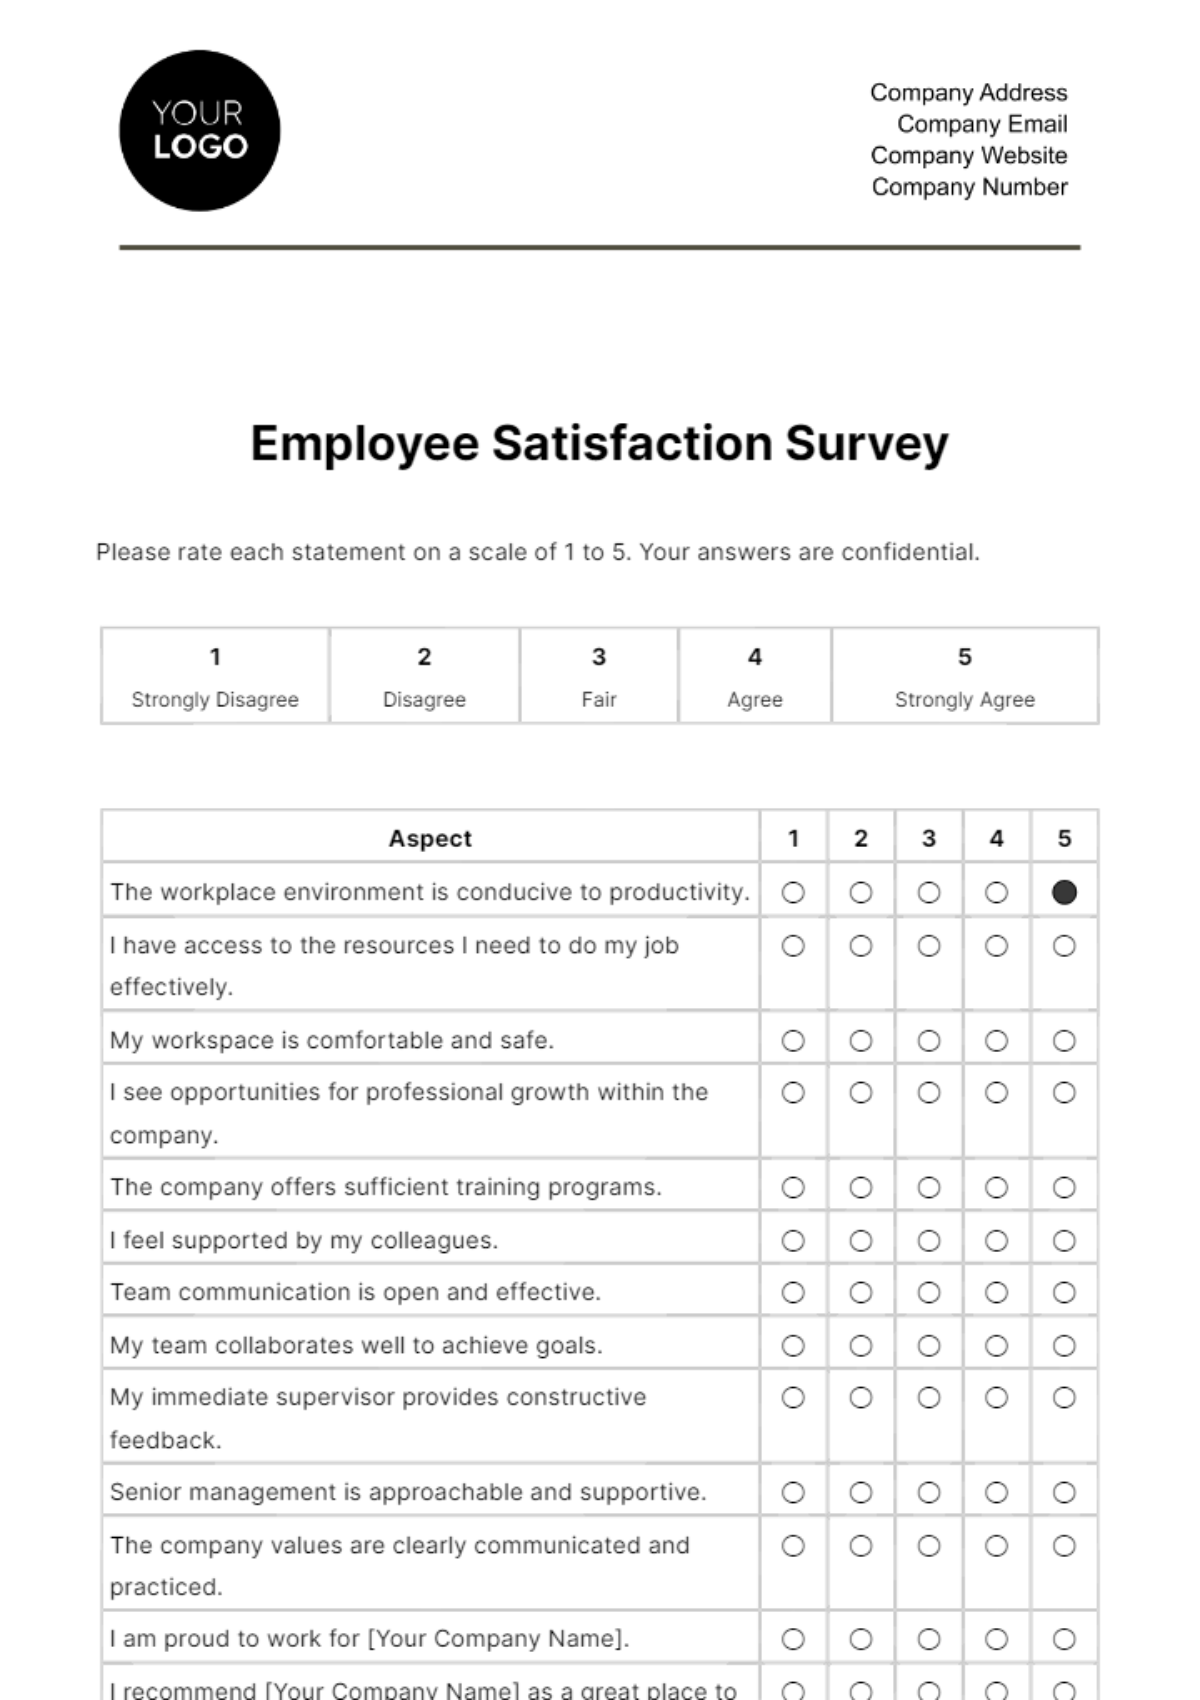 Employee Satisfaction Survey HR Template